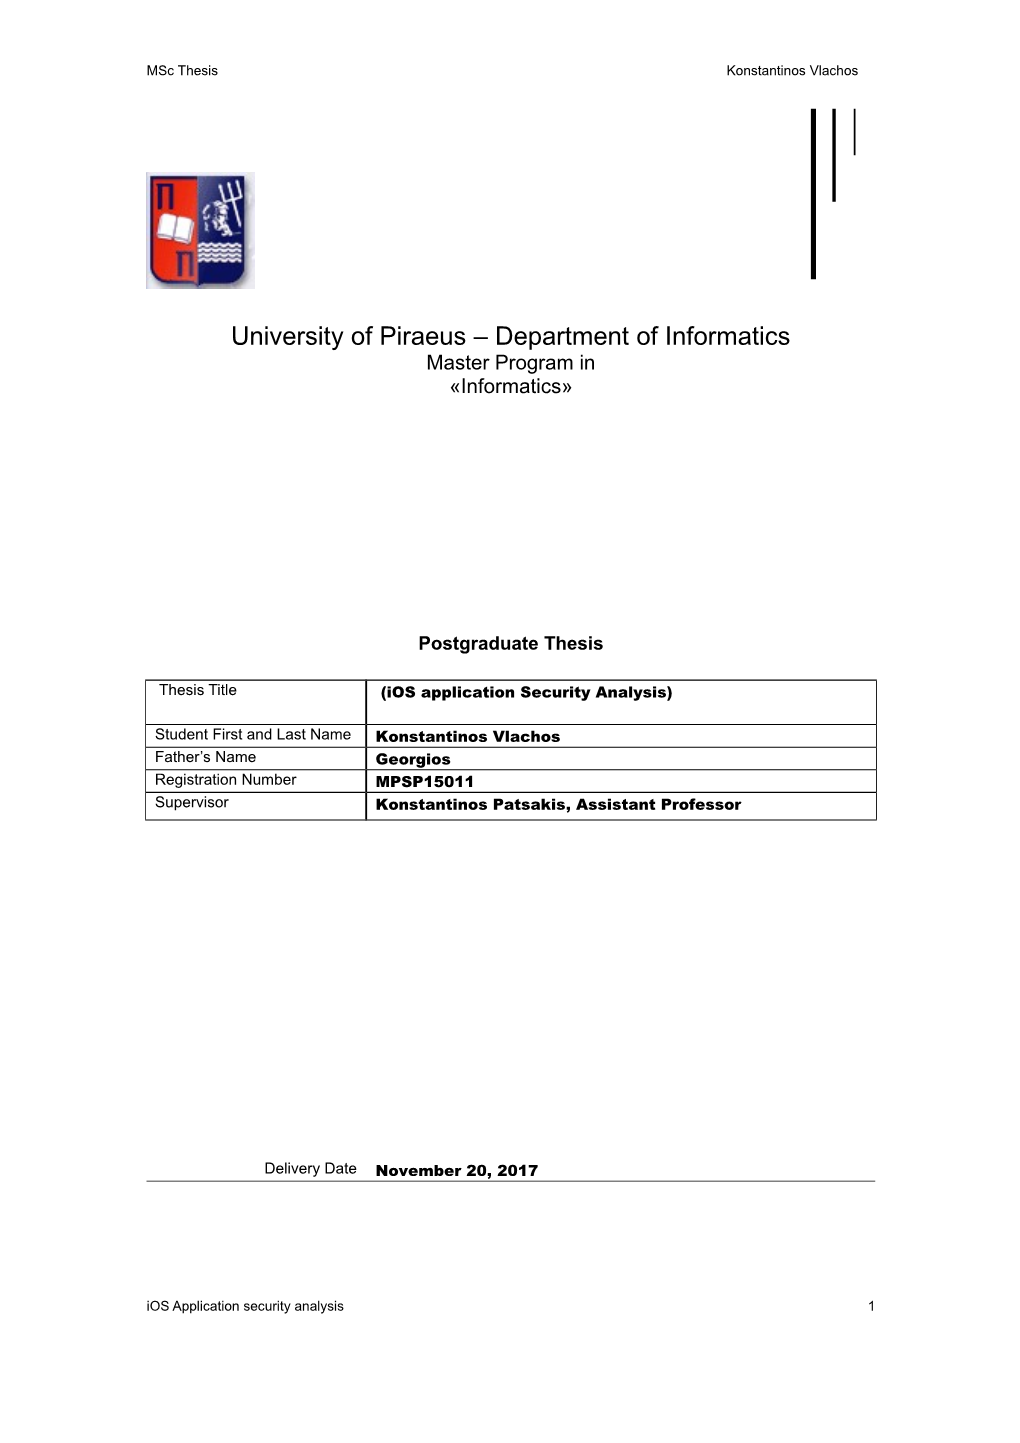 University of Piraeus – Department of Informatics Master Program in «Informatics»